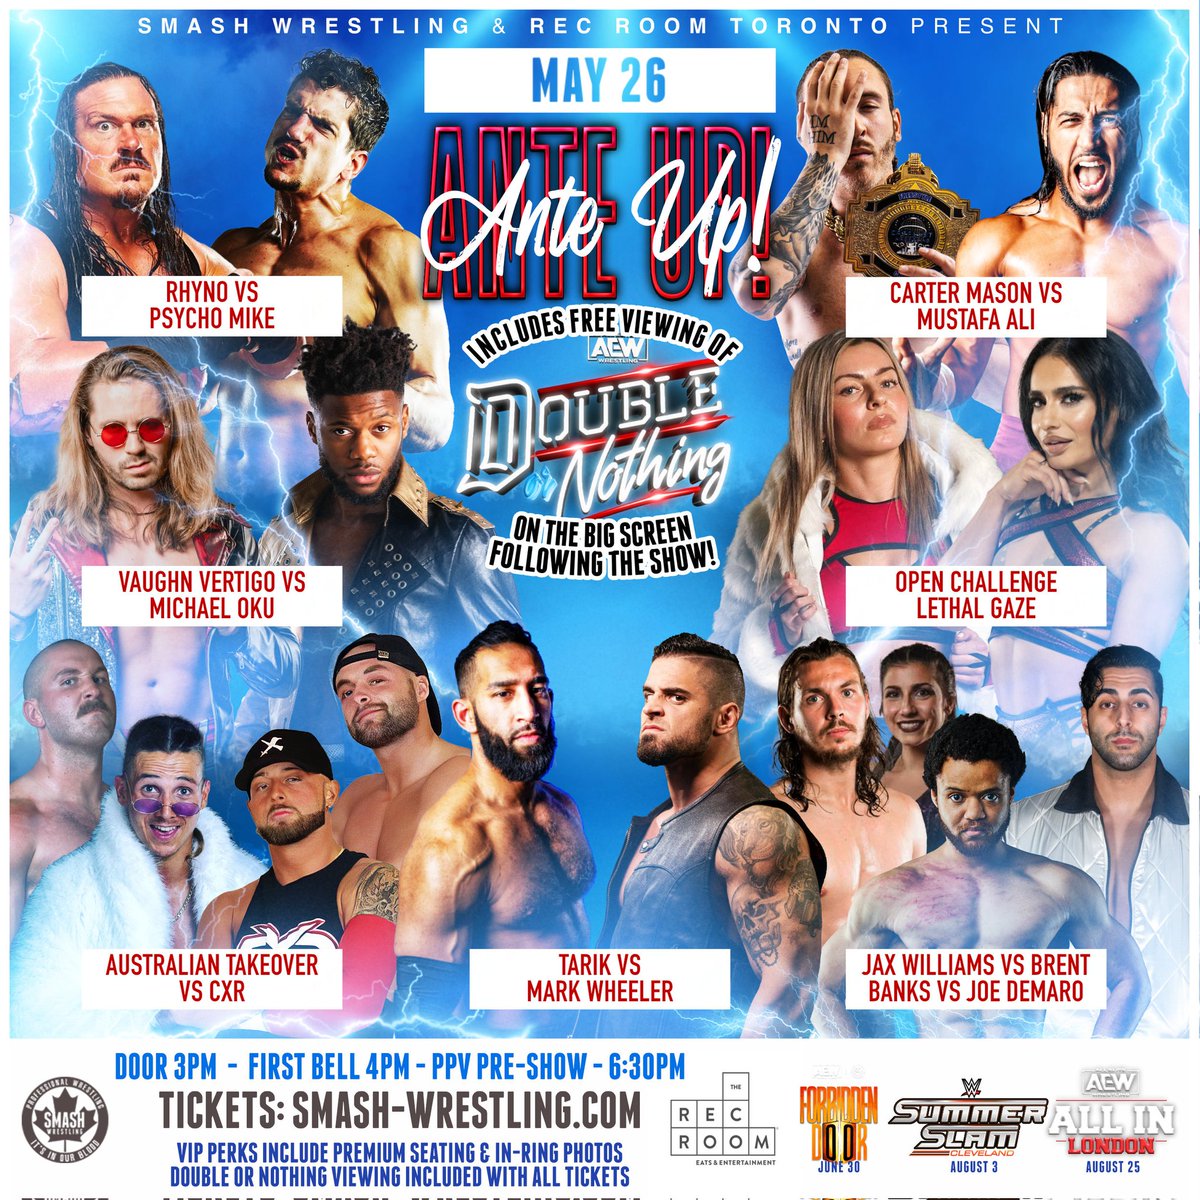 Mustafa Ali (@MustafaAli_X) Rhyno Michael Oku A stacked card + FREE AEW PPV on the BIG screen! May 26 coming up!!! 🎟️ smash-wrestling.com